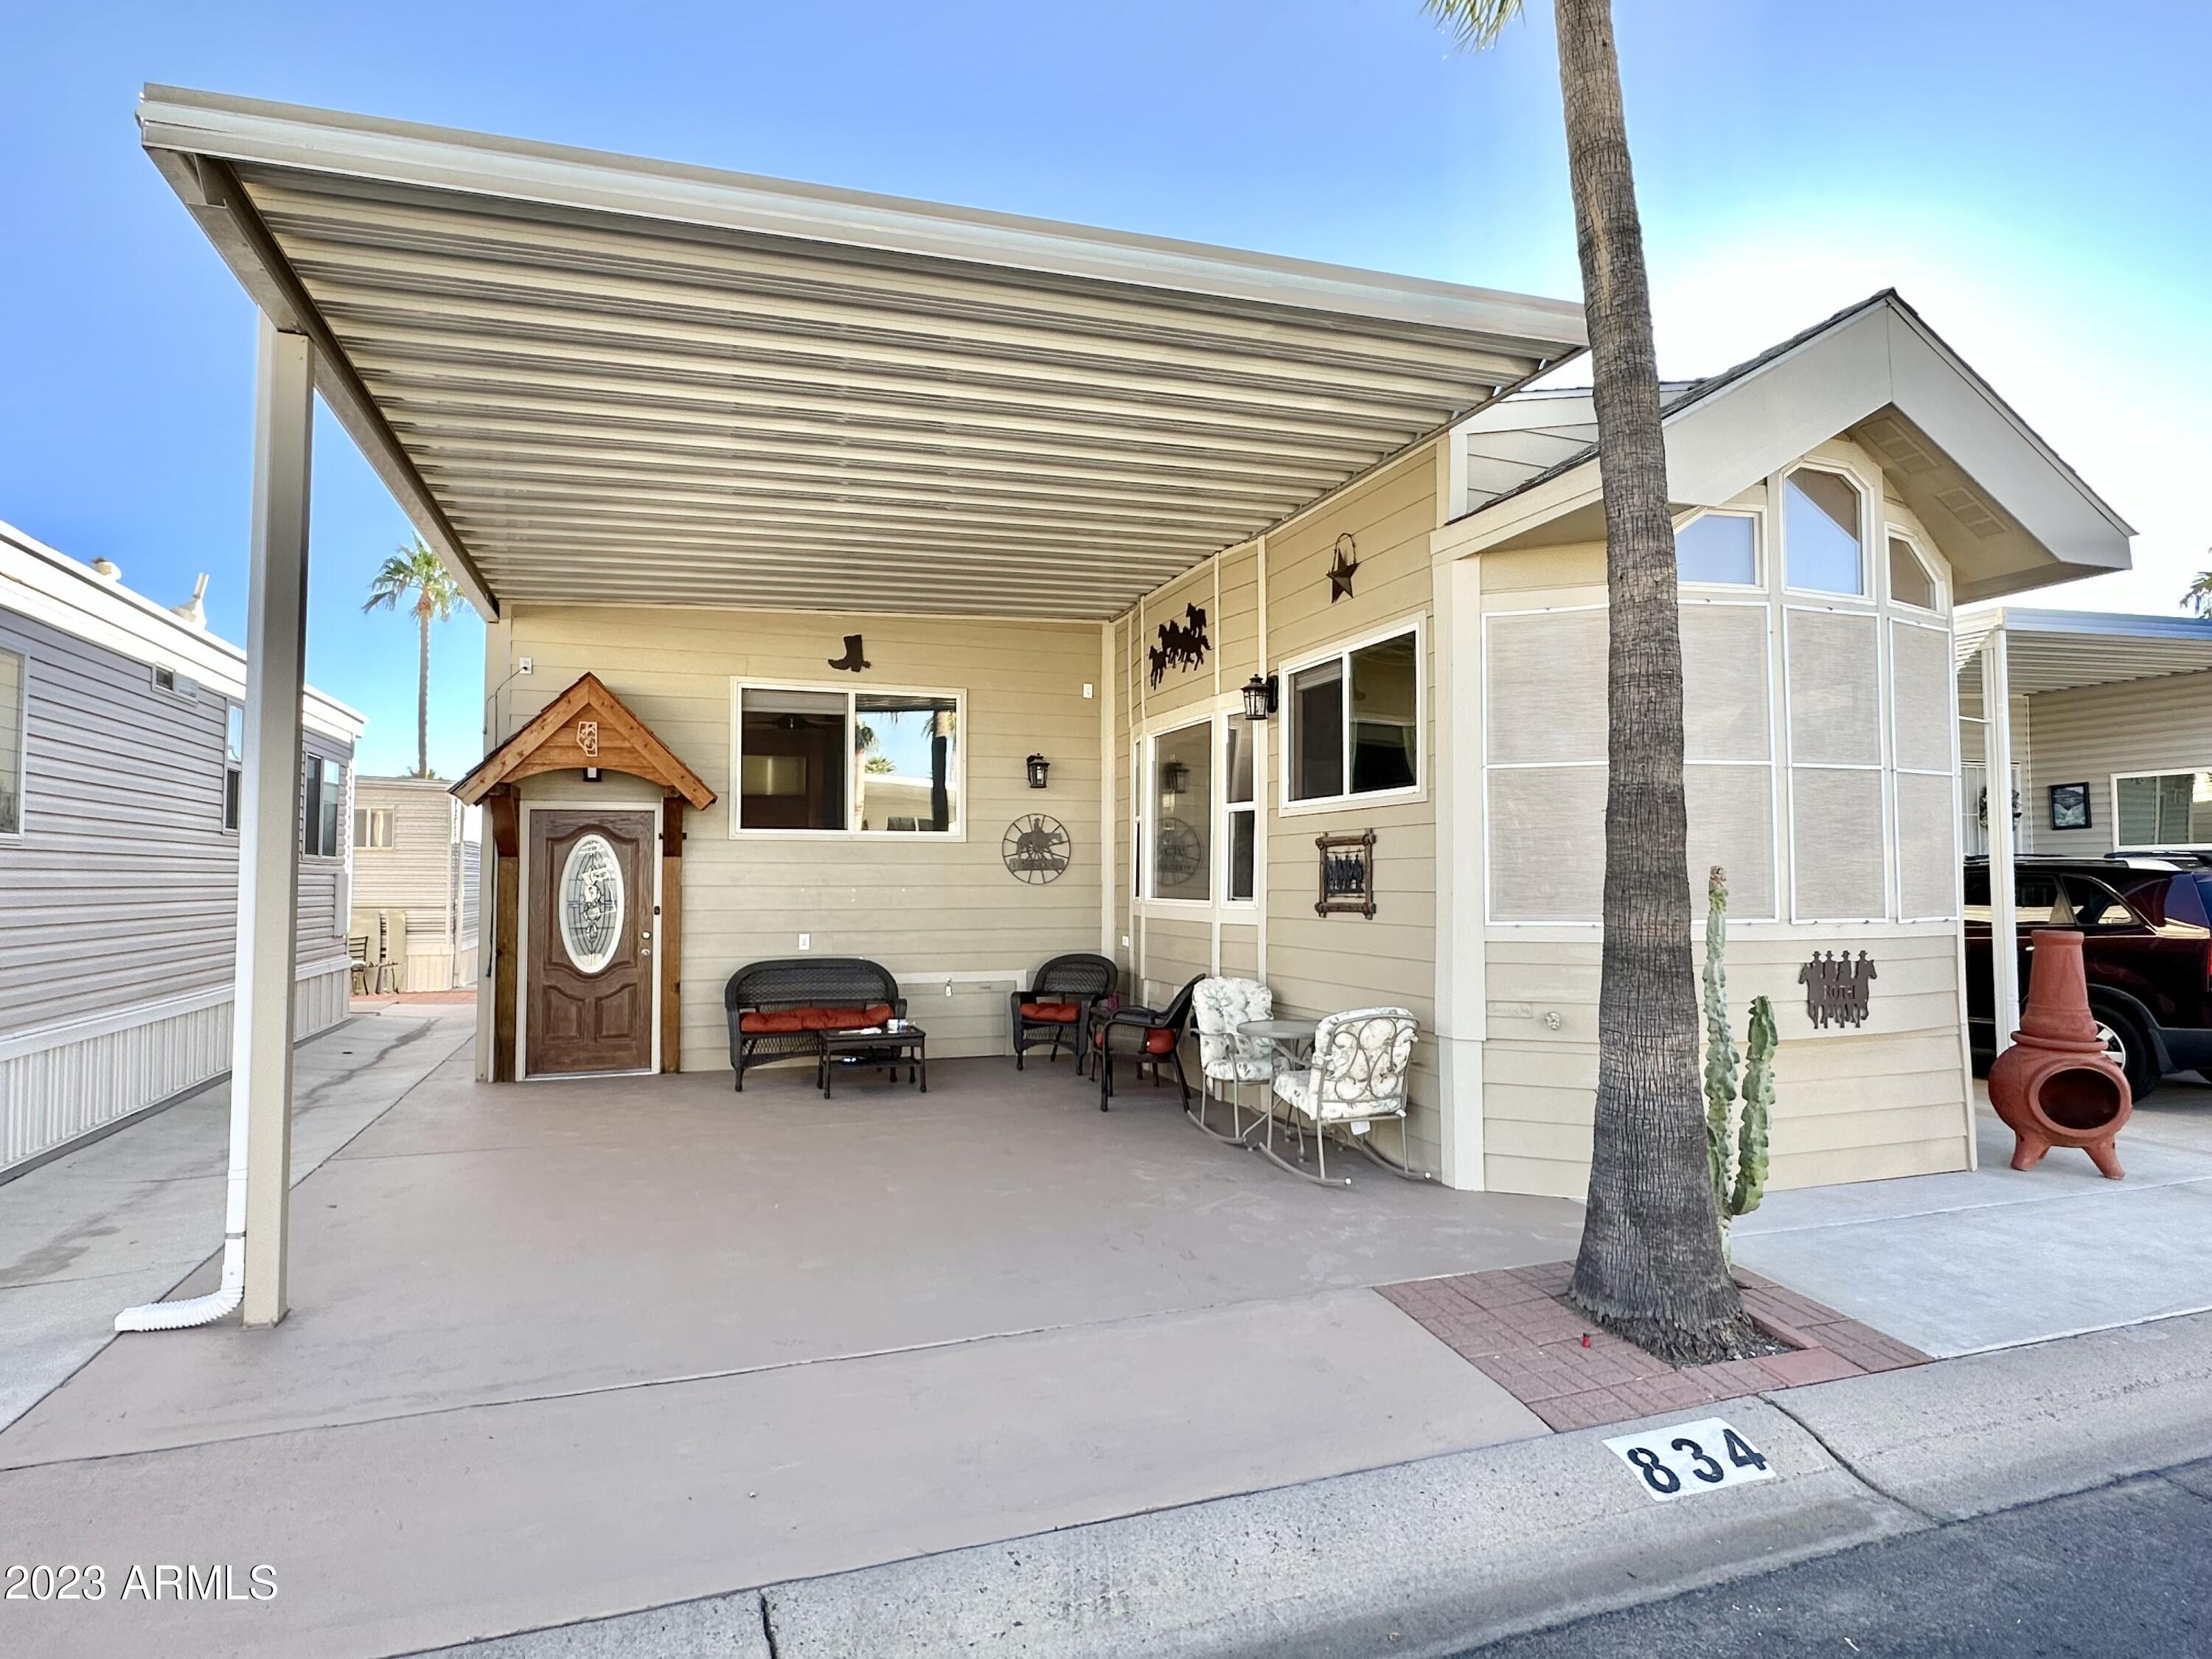 View Apache Junction, AZ 85119 mobile home